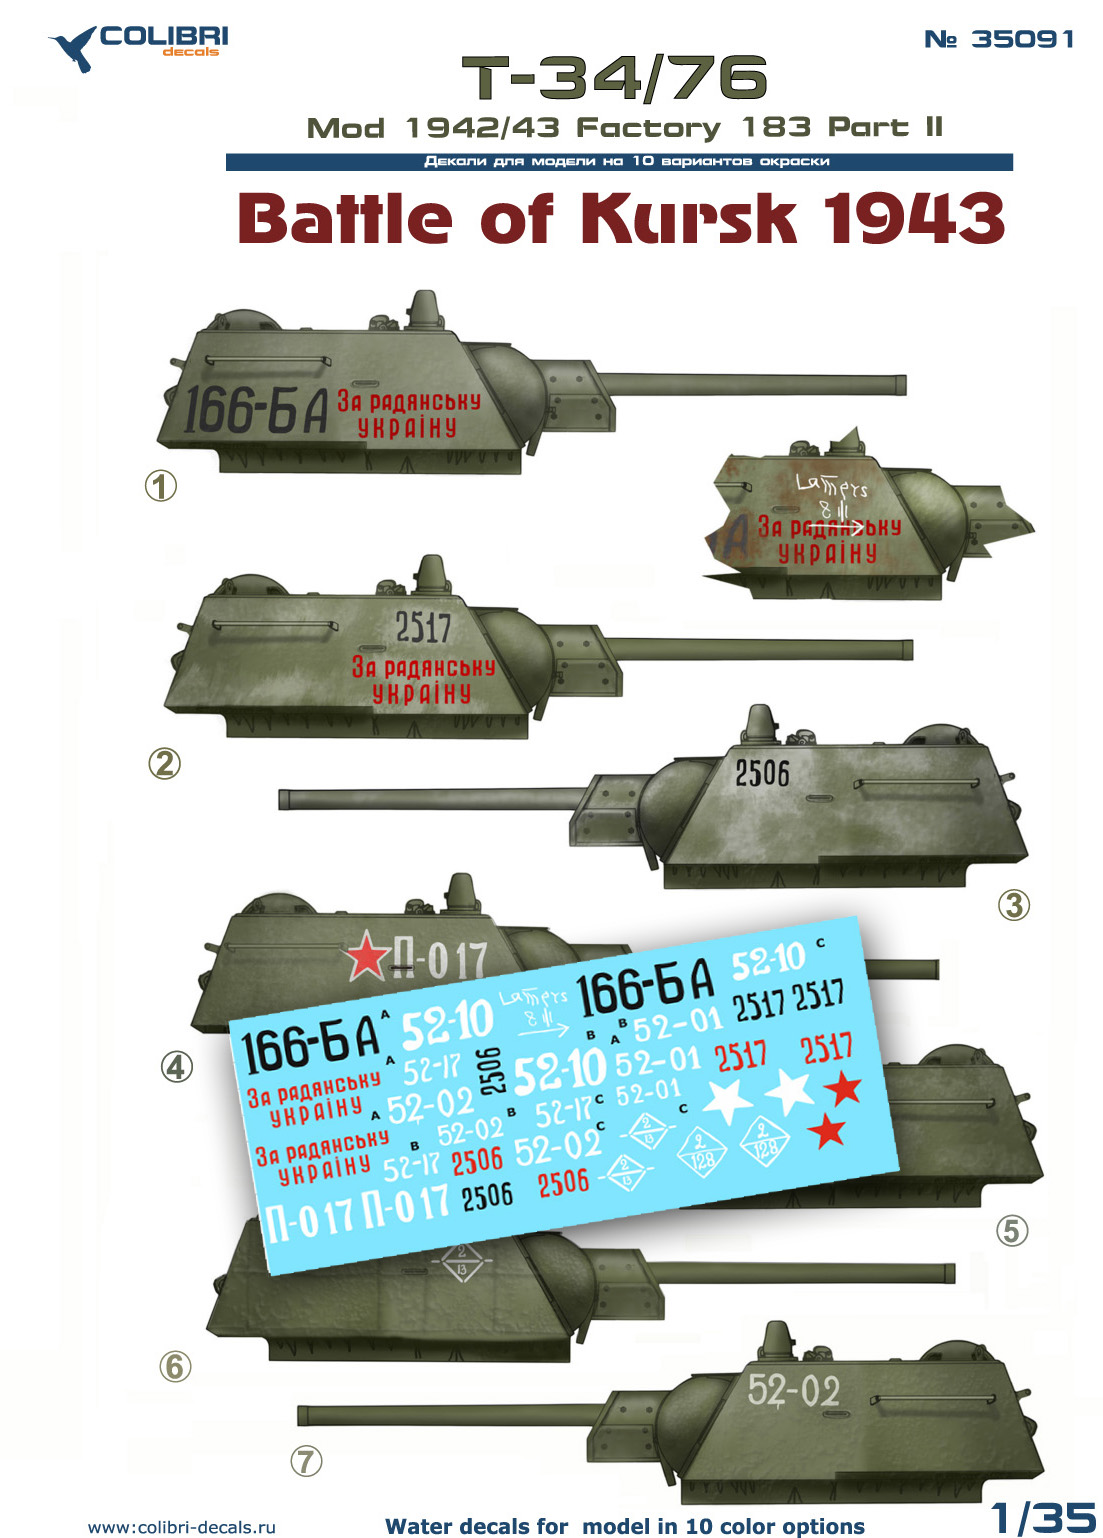 Декаль 1/35 Т-34/76 мod 1942/43 Factory 183 Part II Battle of Kursk1943 (Colibri Decals)